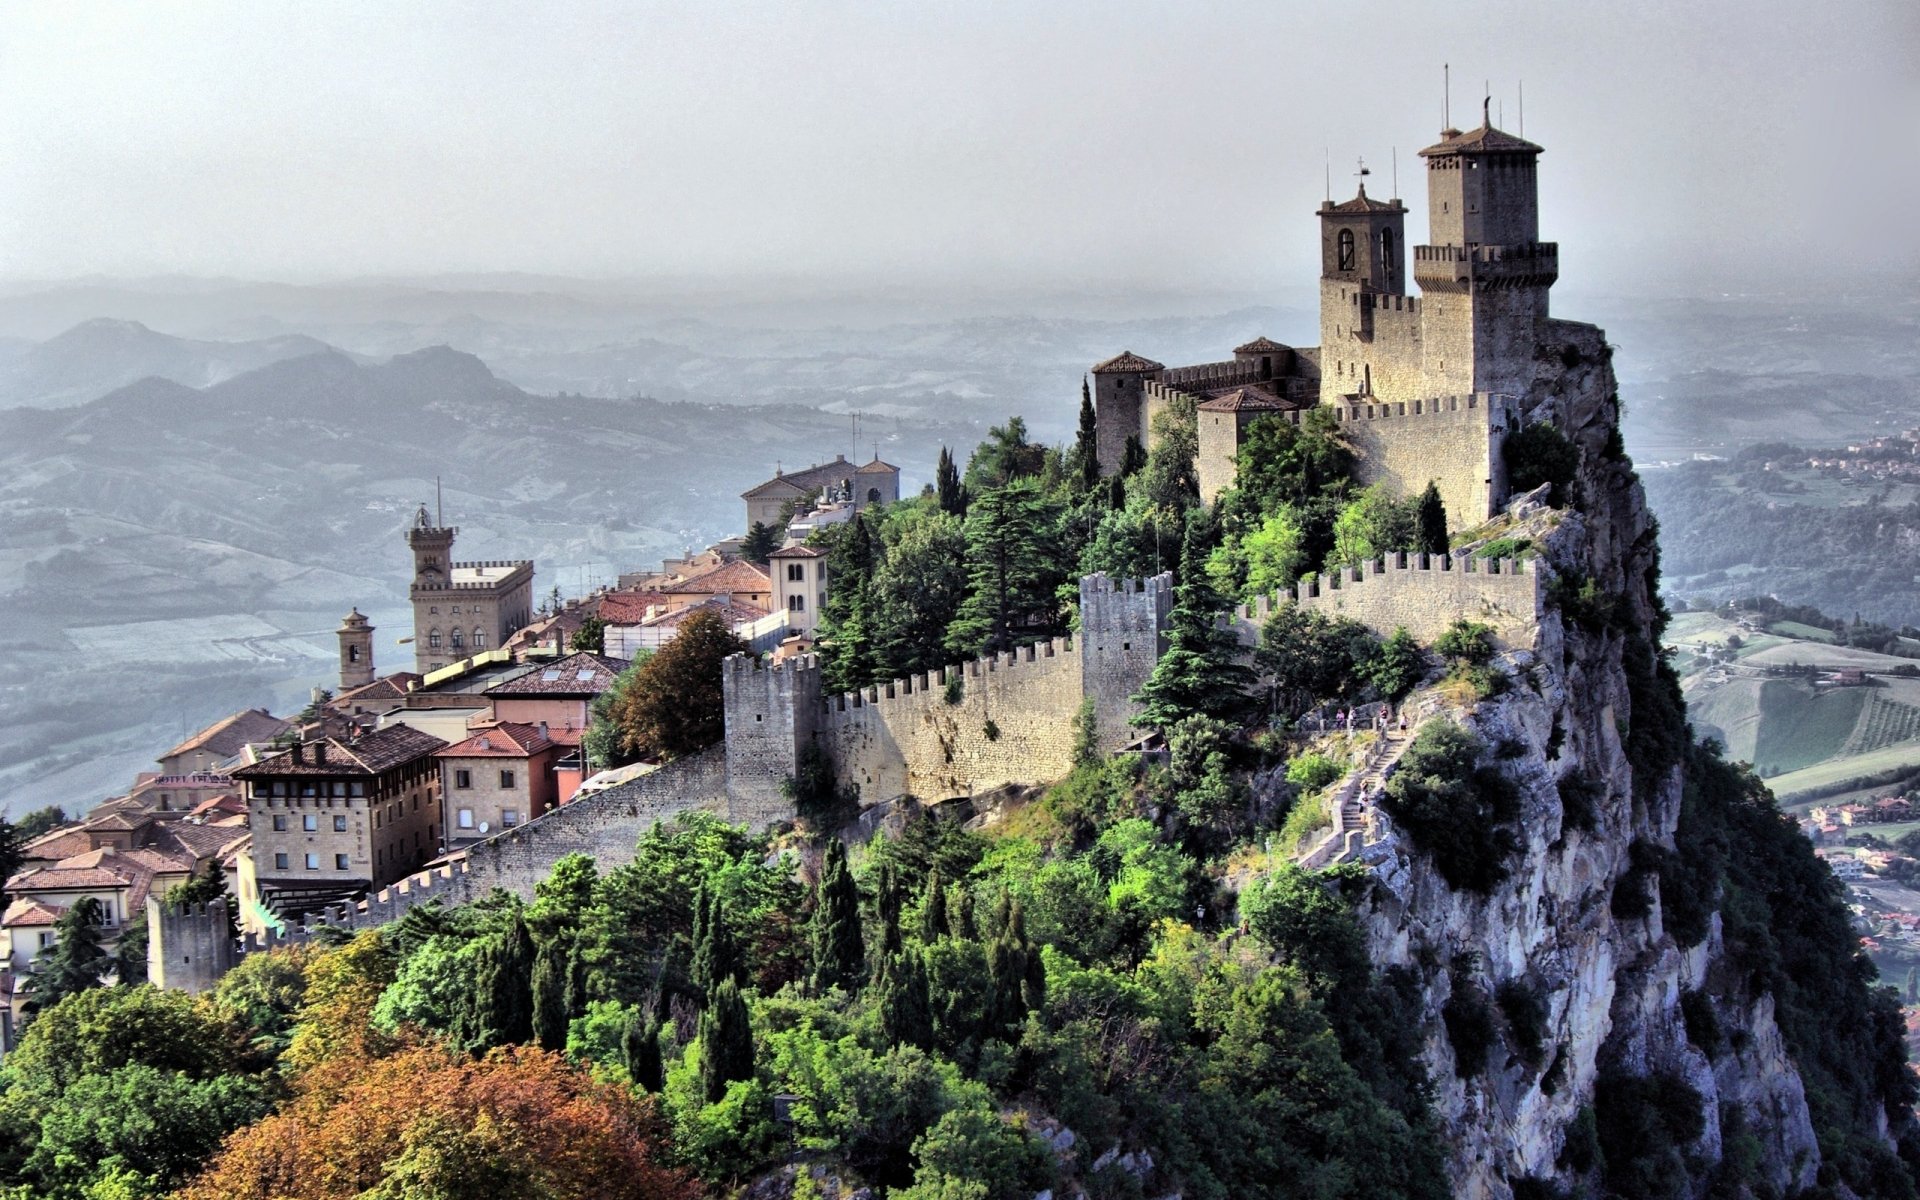 San Marino Pictures  Download Free Images on Unsplash